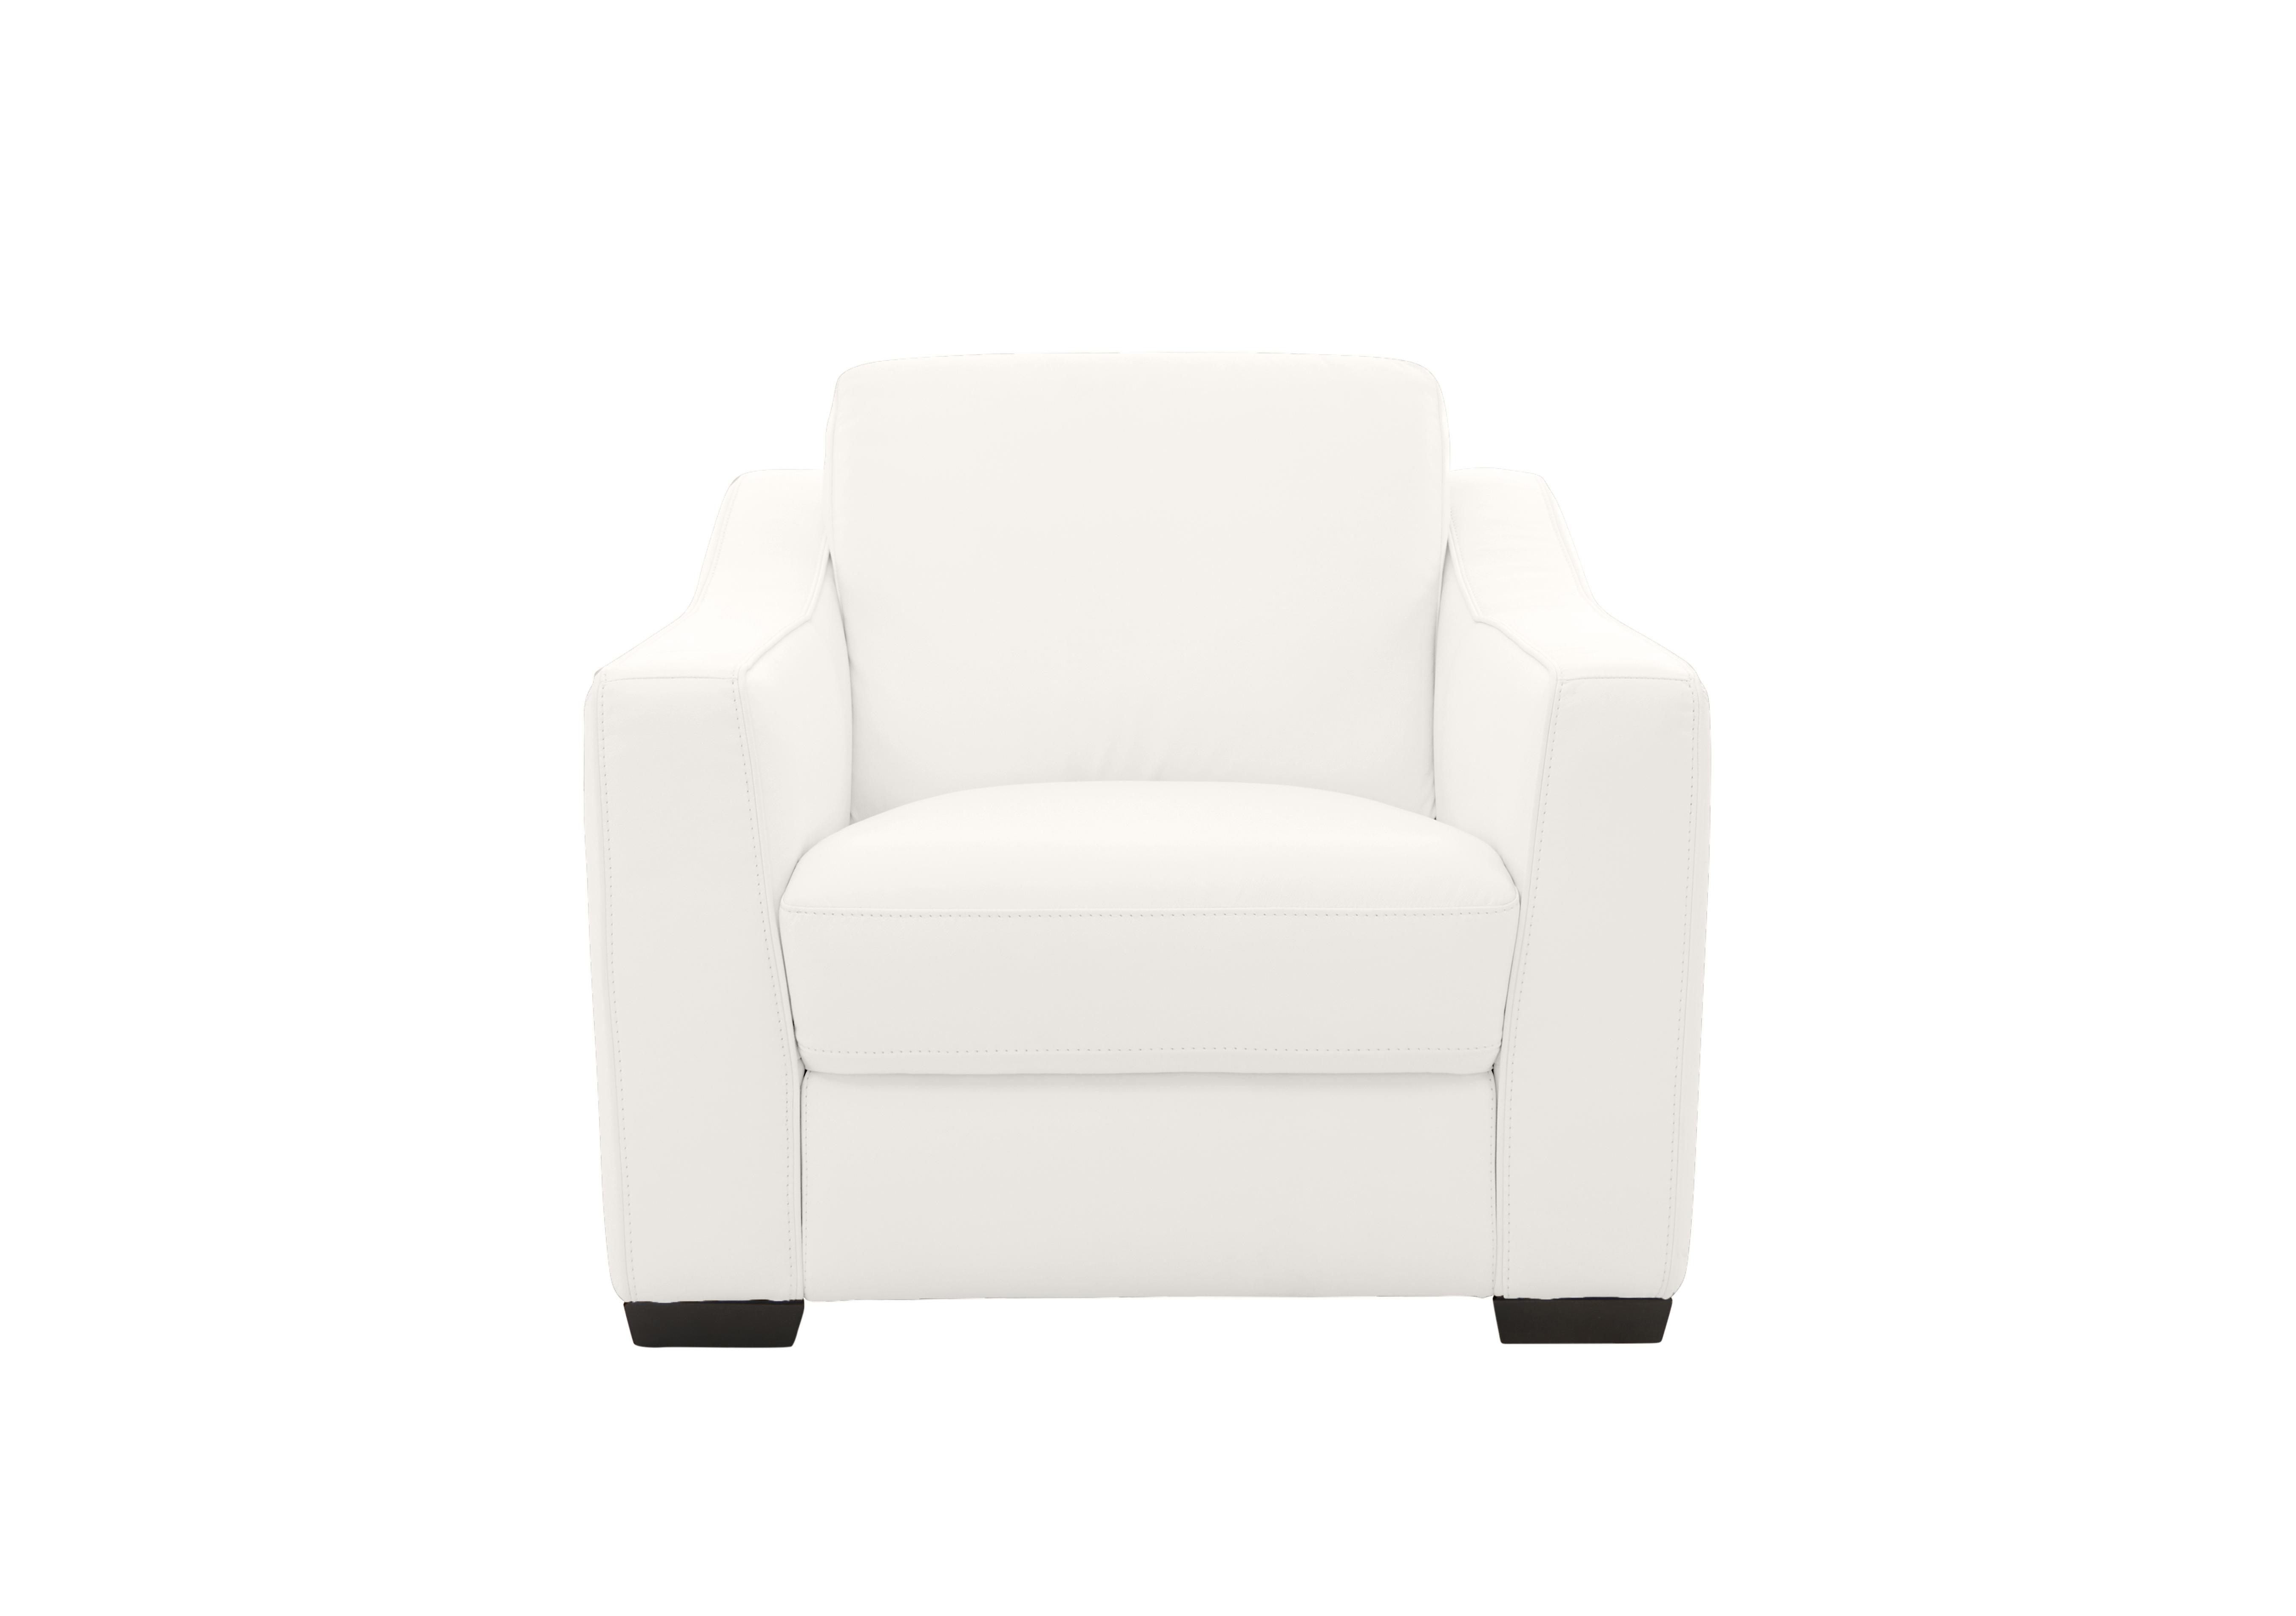 Optimus Leather Armchair in Bv-744d Star White on Furniture Village